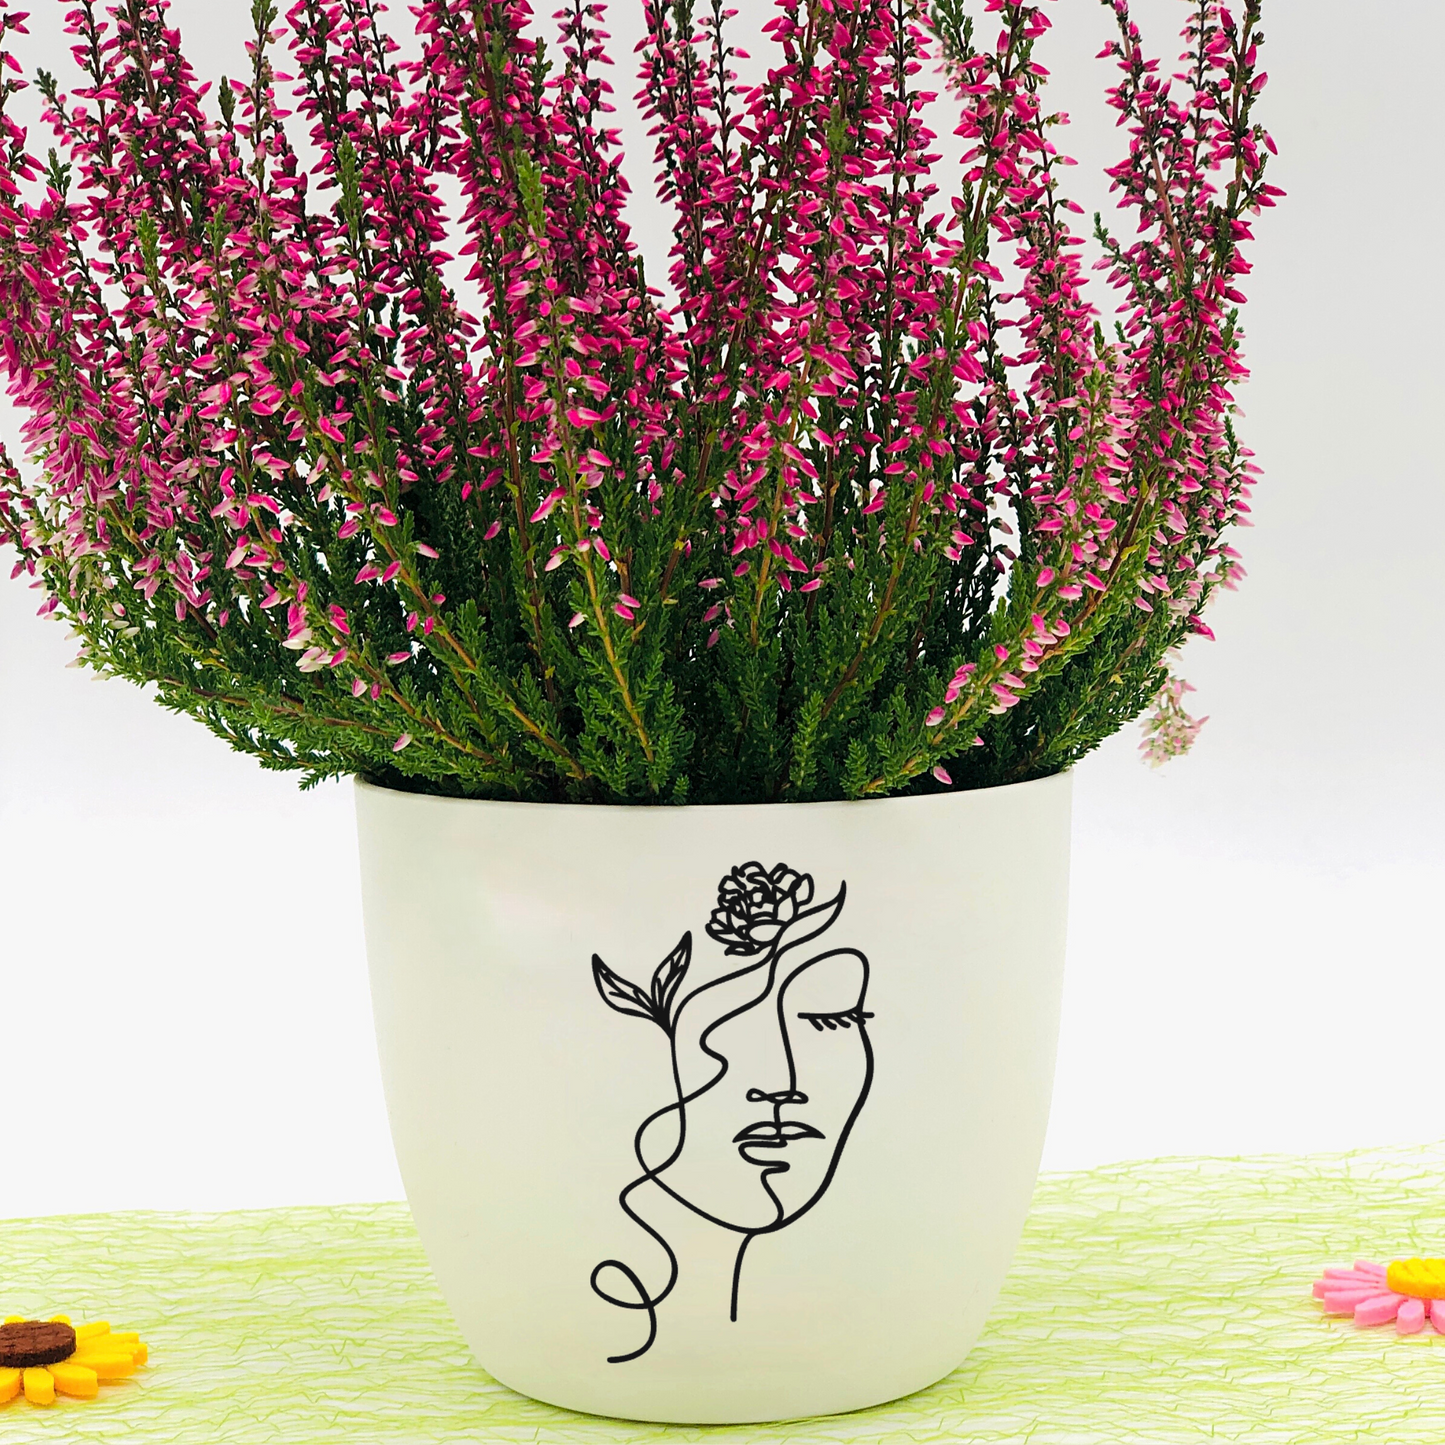 Blumentopf Line Art - weiß oder schwarz - Faceline Aufkleber - Geschenkidee Blumentopf - Geschenk Blumentopf Geburtstag - beste Freundin - Muttertag